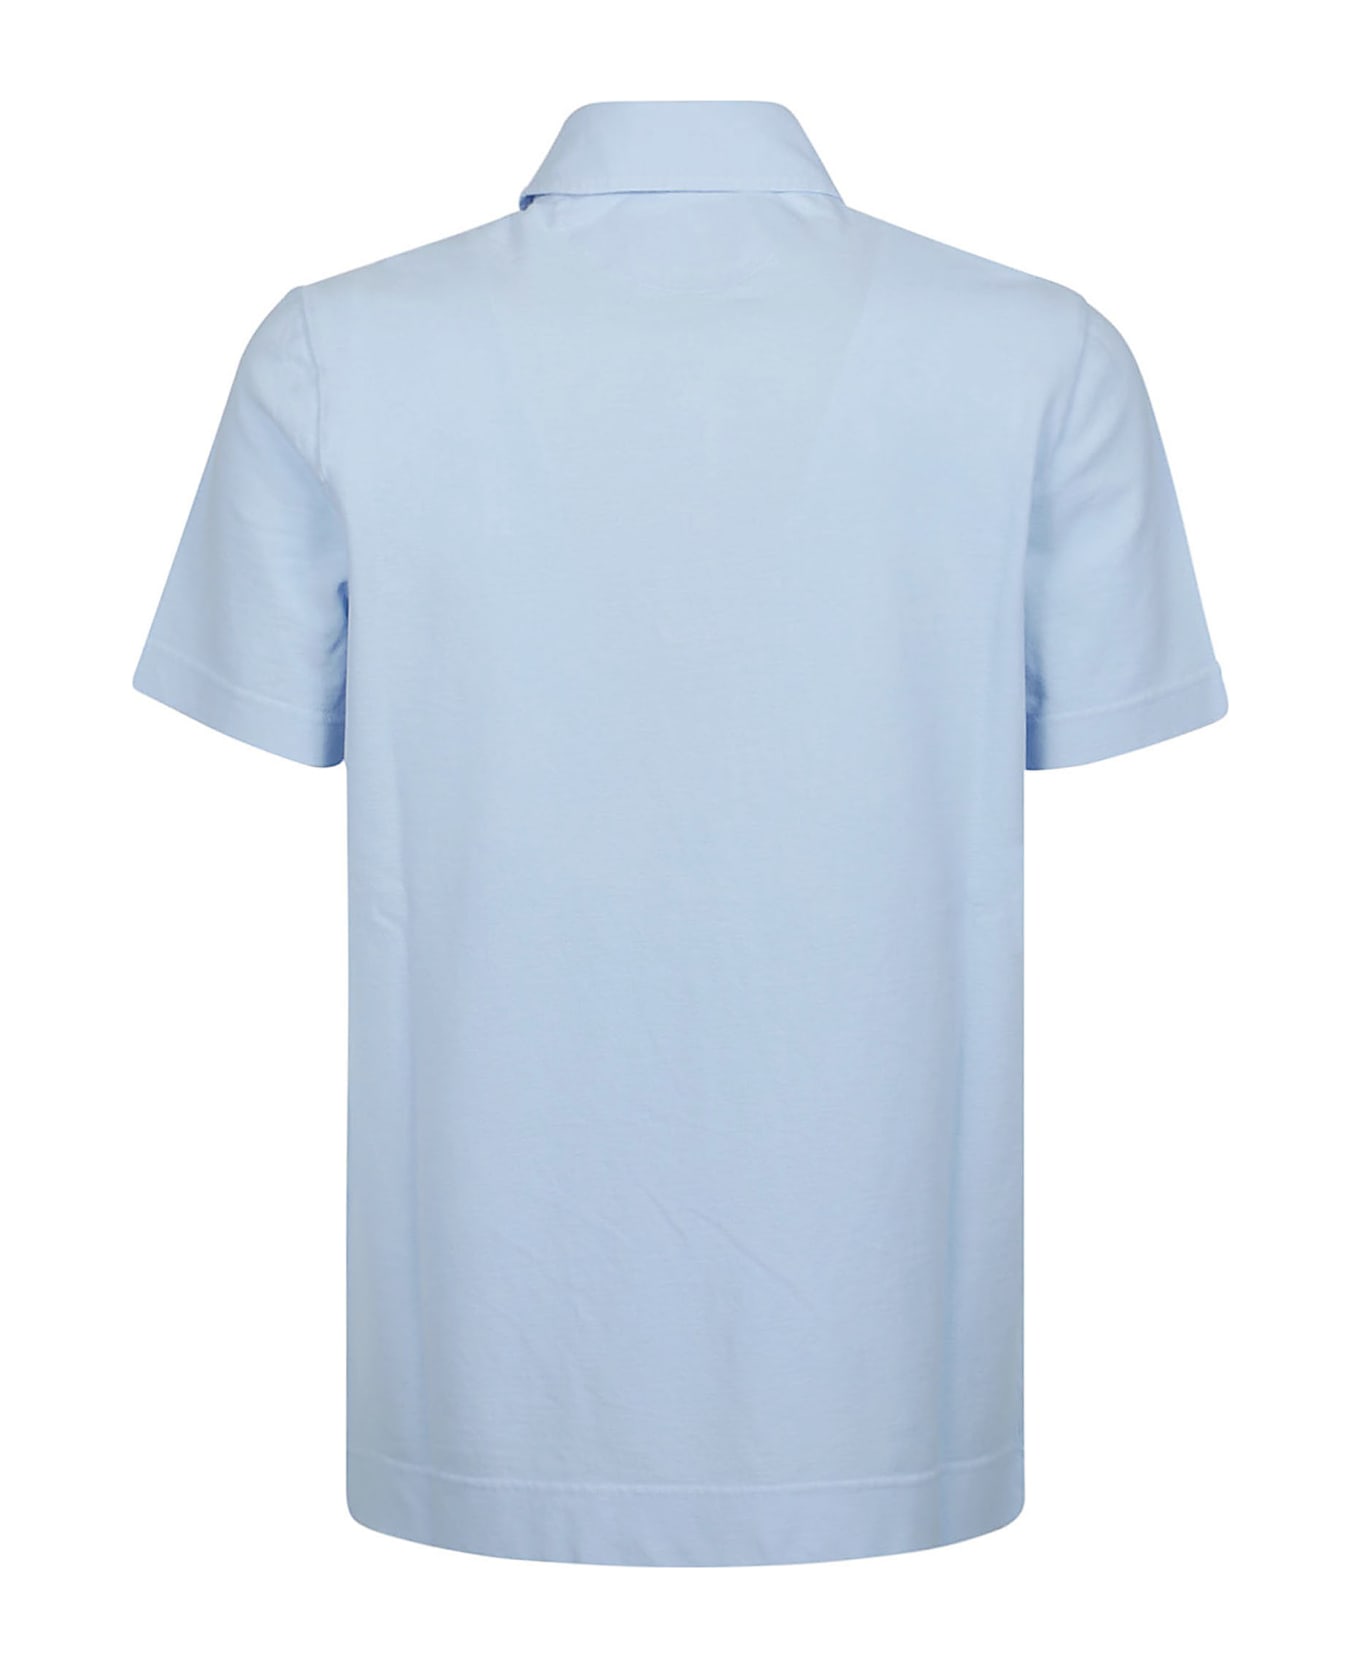 Ballantyne Short Sleeve Polo Shirt - Light Blu Capri